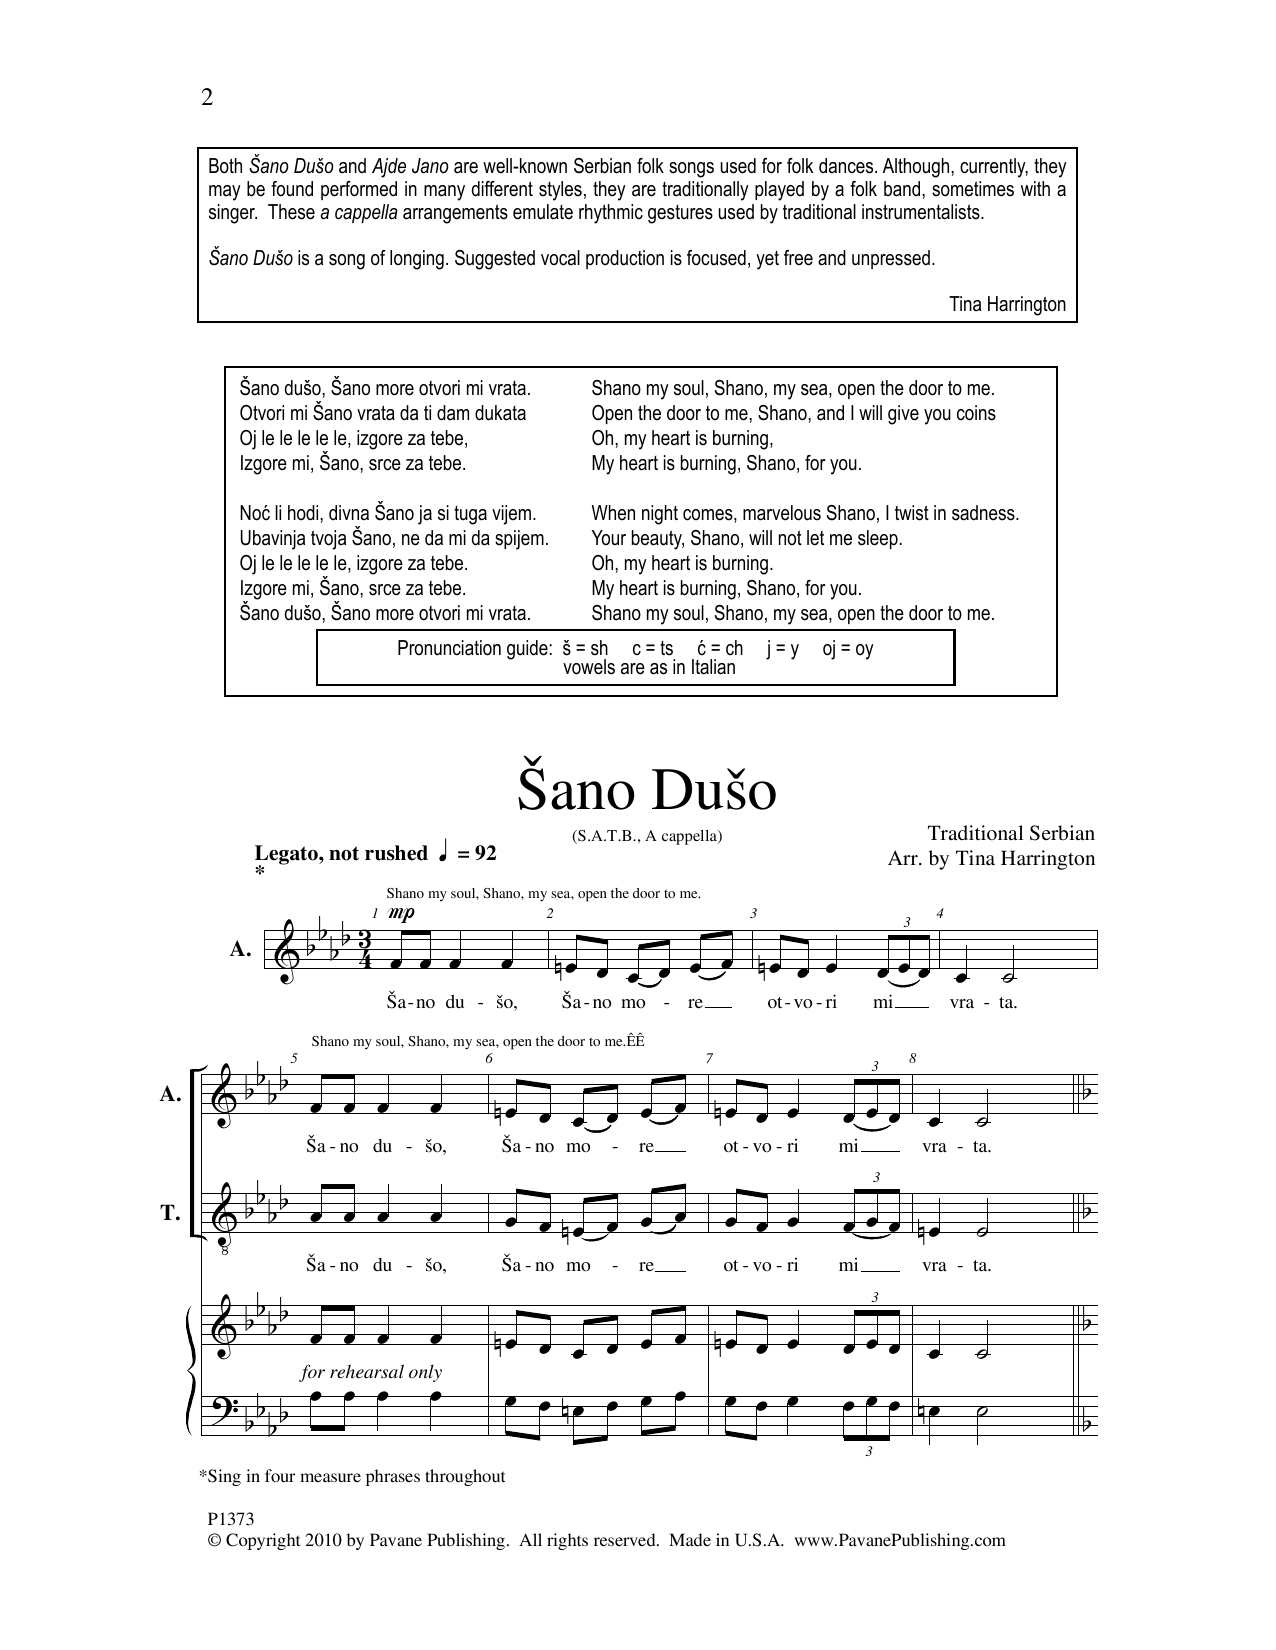 Download Tina Harrington Sano Duso Sheet Music